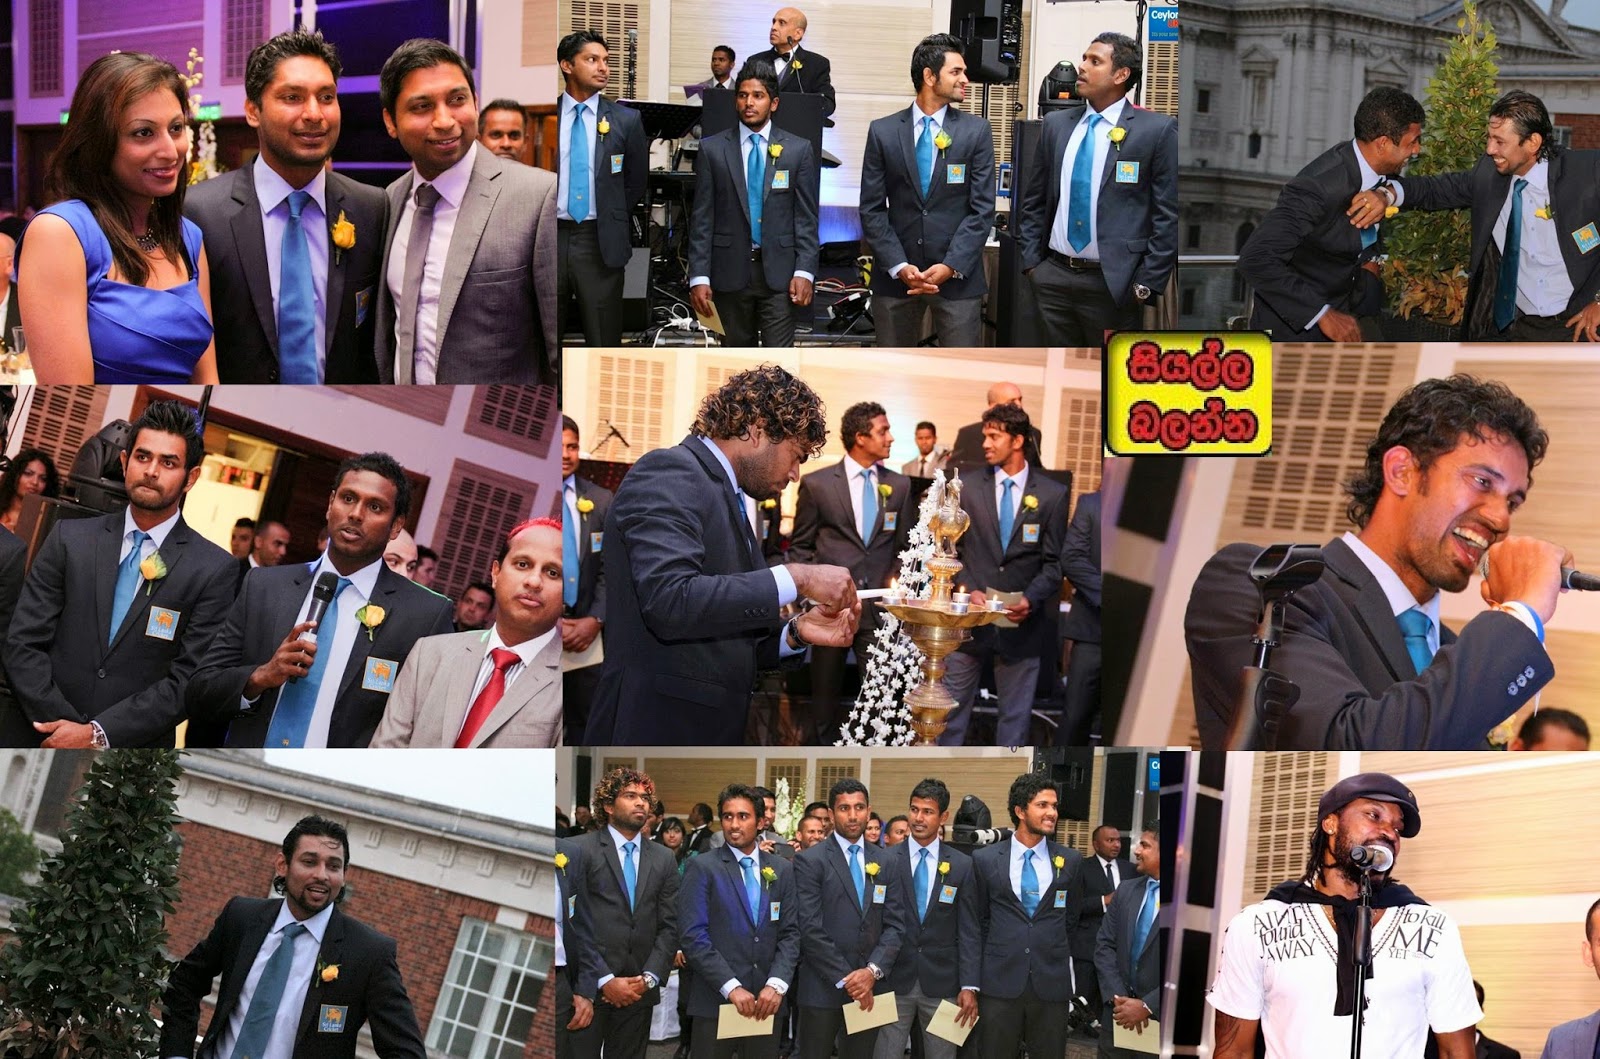 http://picture.gossiplankahotnews.com/2014/06/sri-lankan-cricket-team-in-uk.html